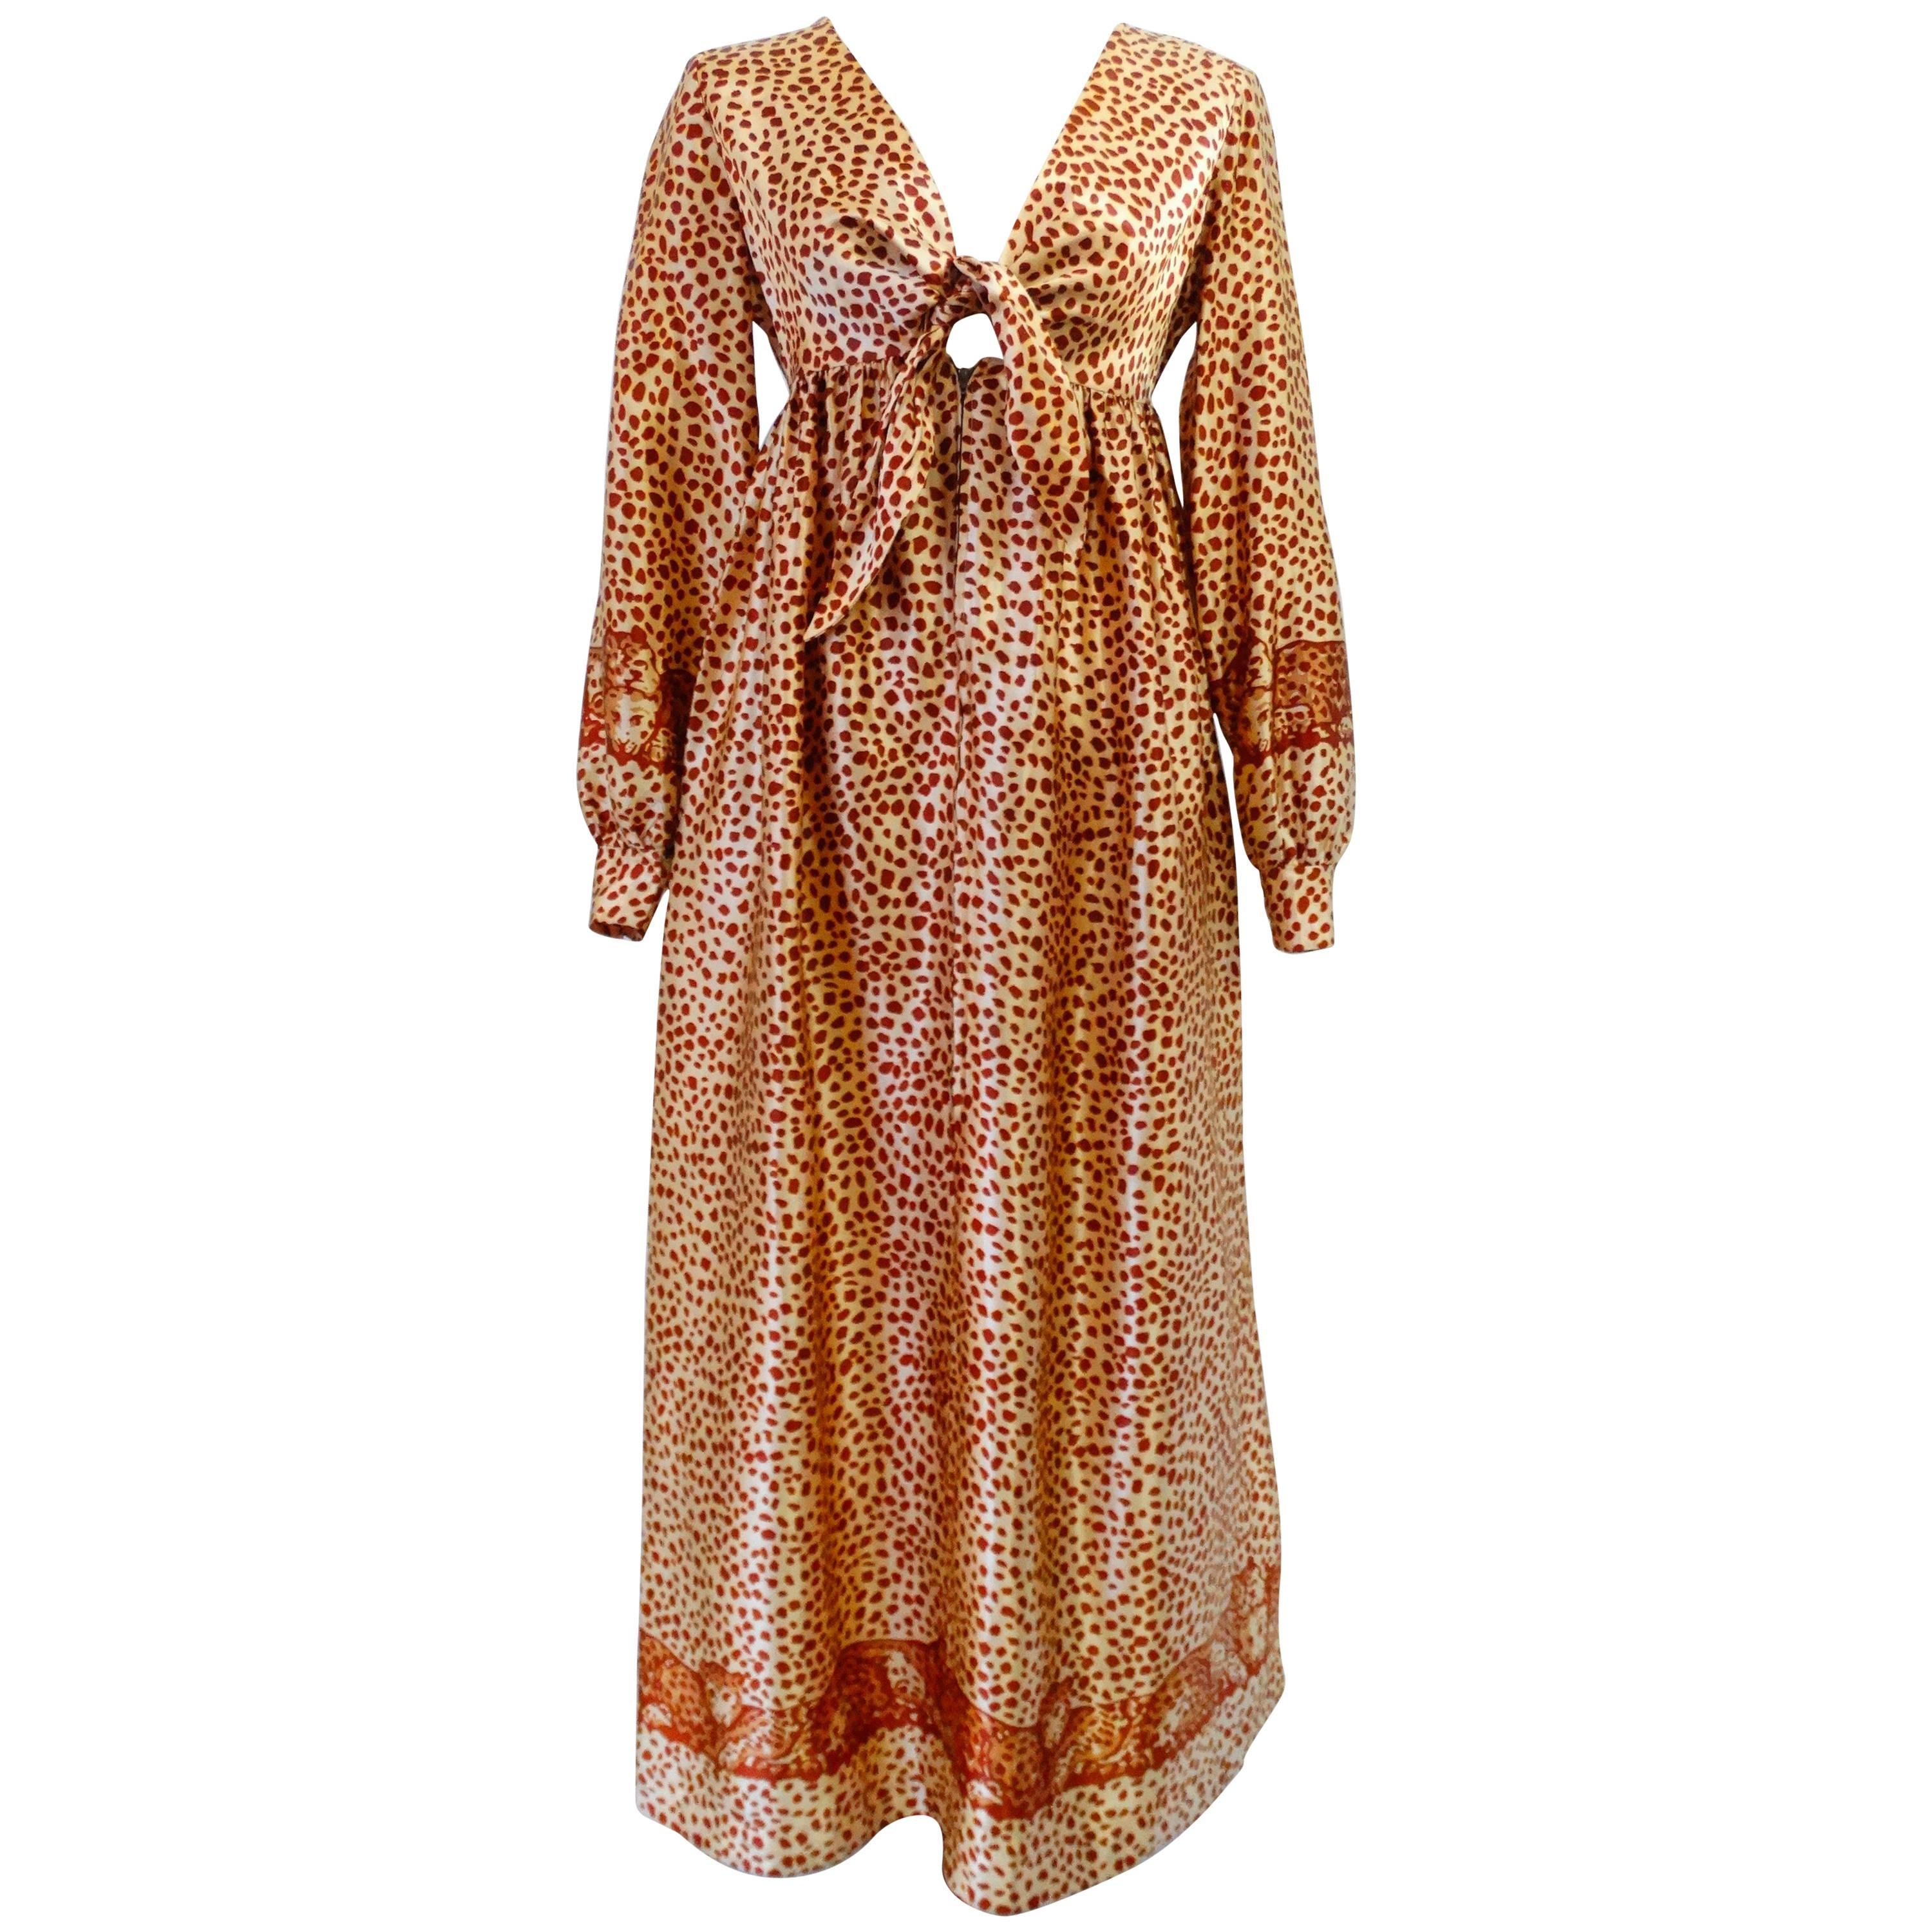 1970s Saks Fifth Avenue Satin Leopard Gown